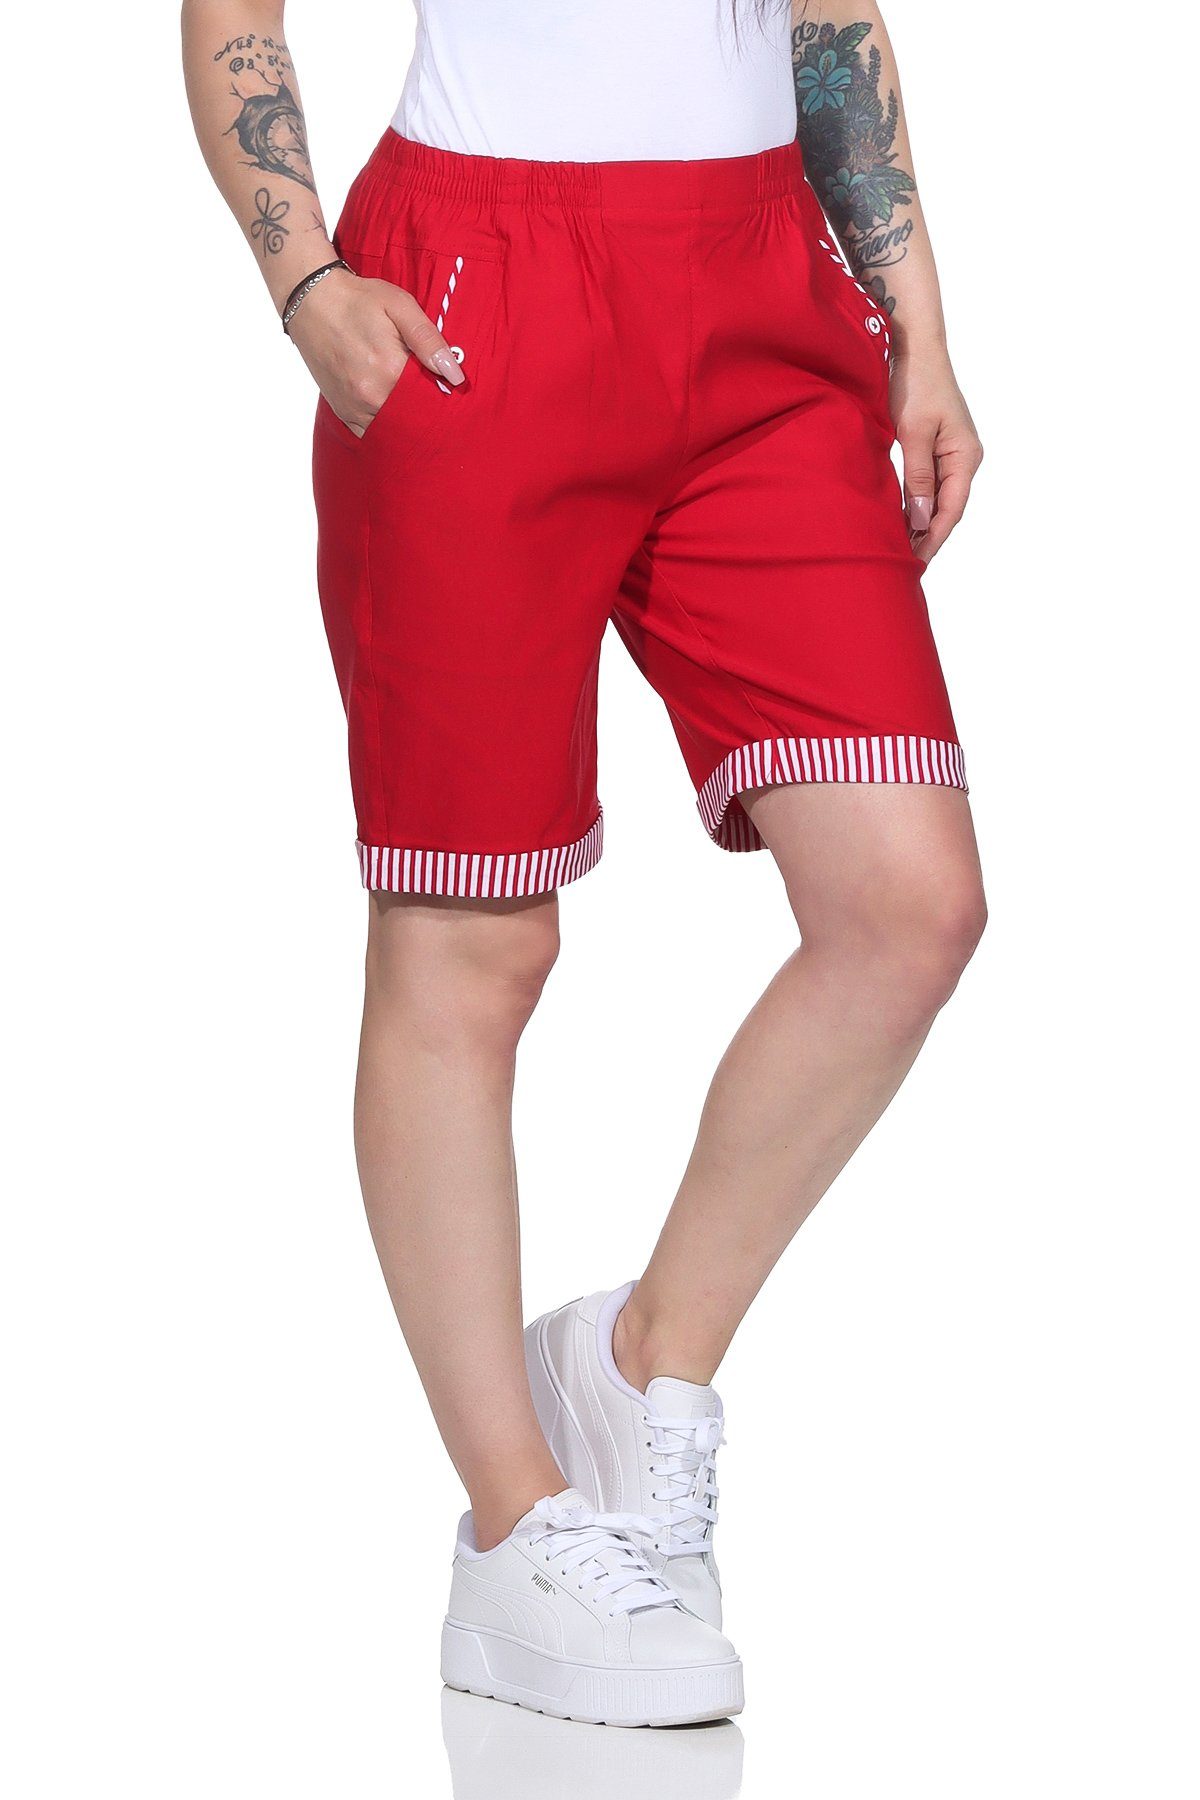 Rote Damenbermudas kaufen » Rote Damen Bermuda Shorts | OTTO